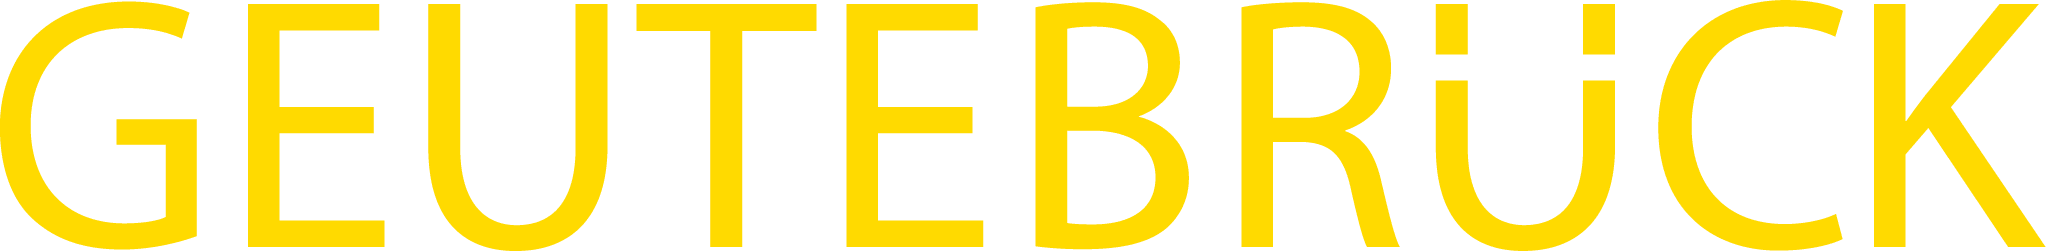 logo-geutebruck-amarillo